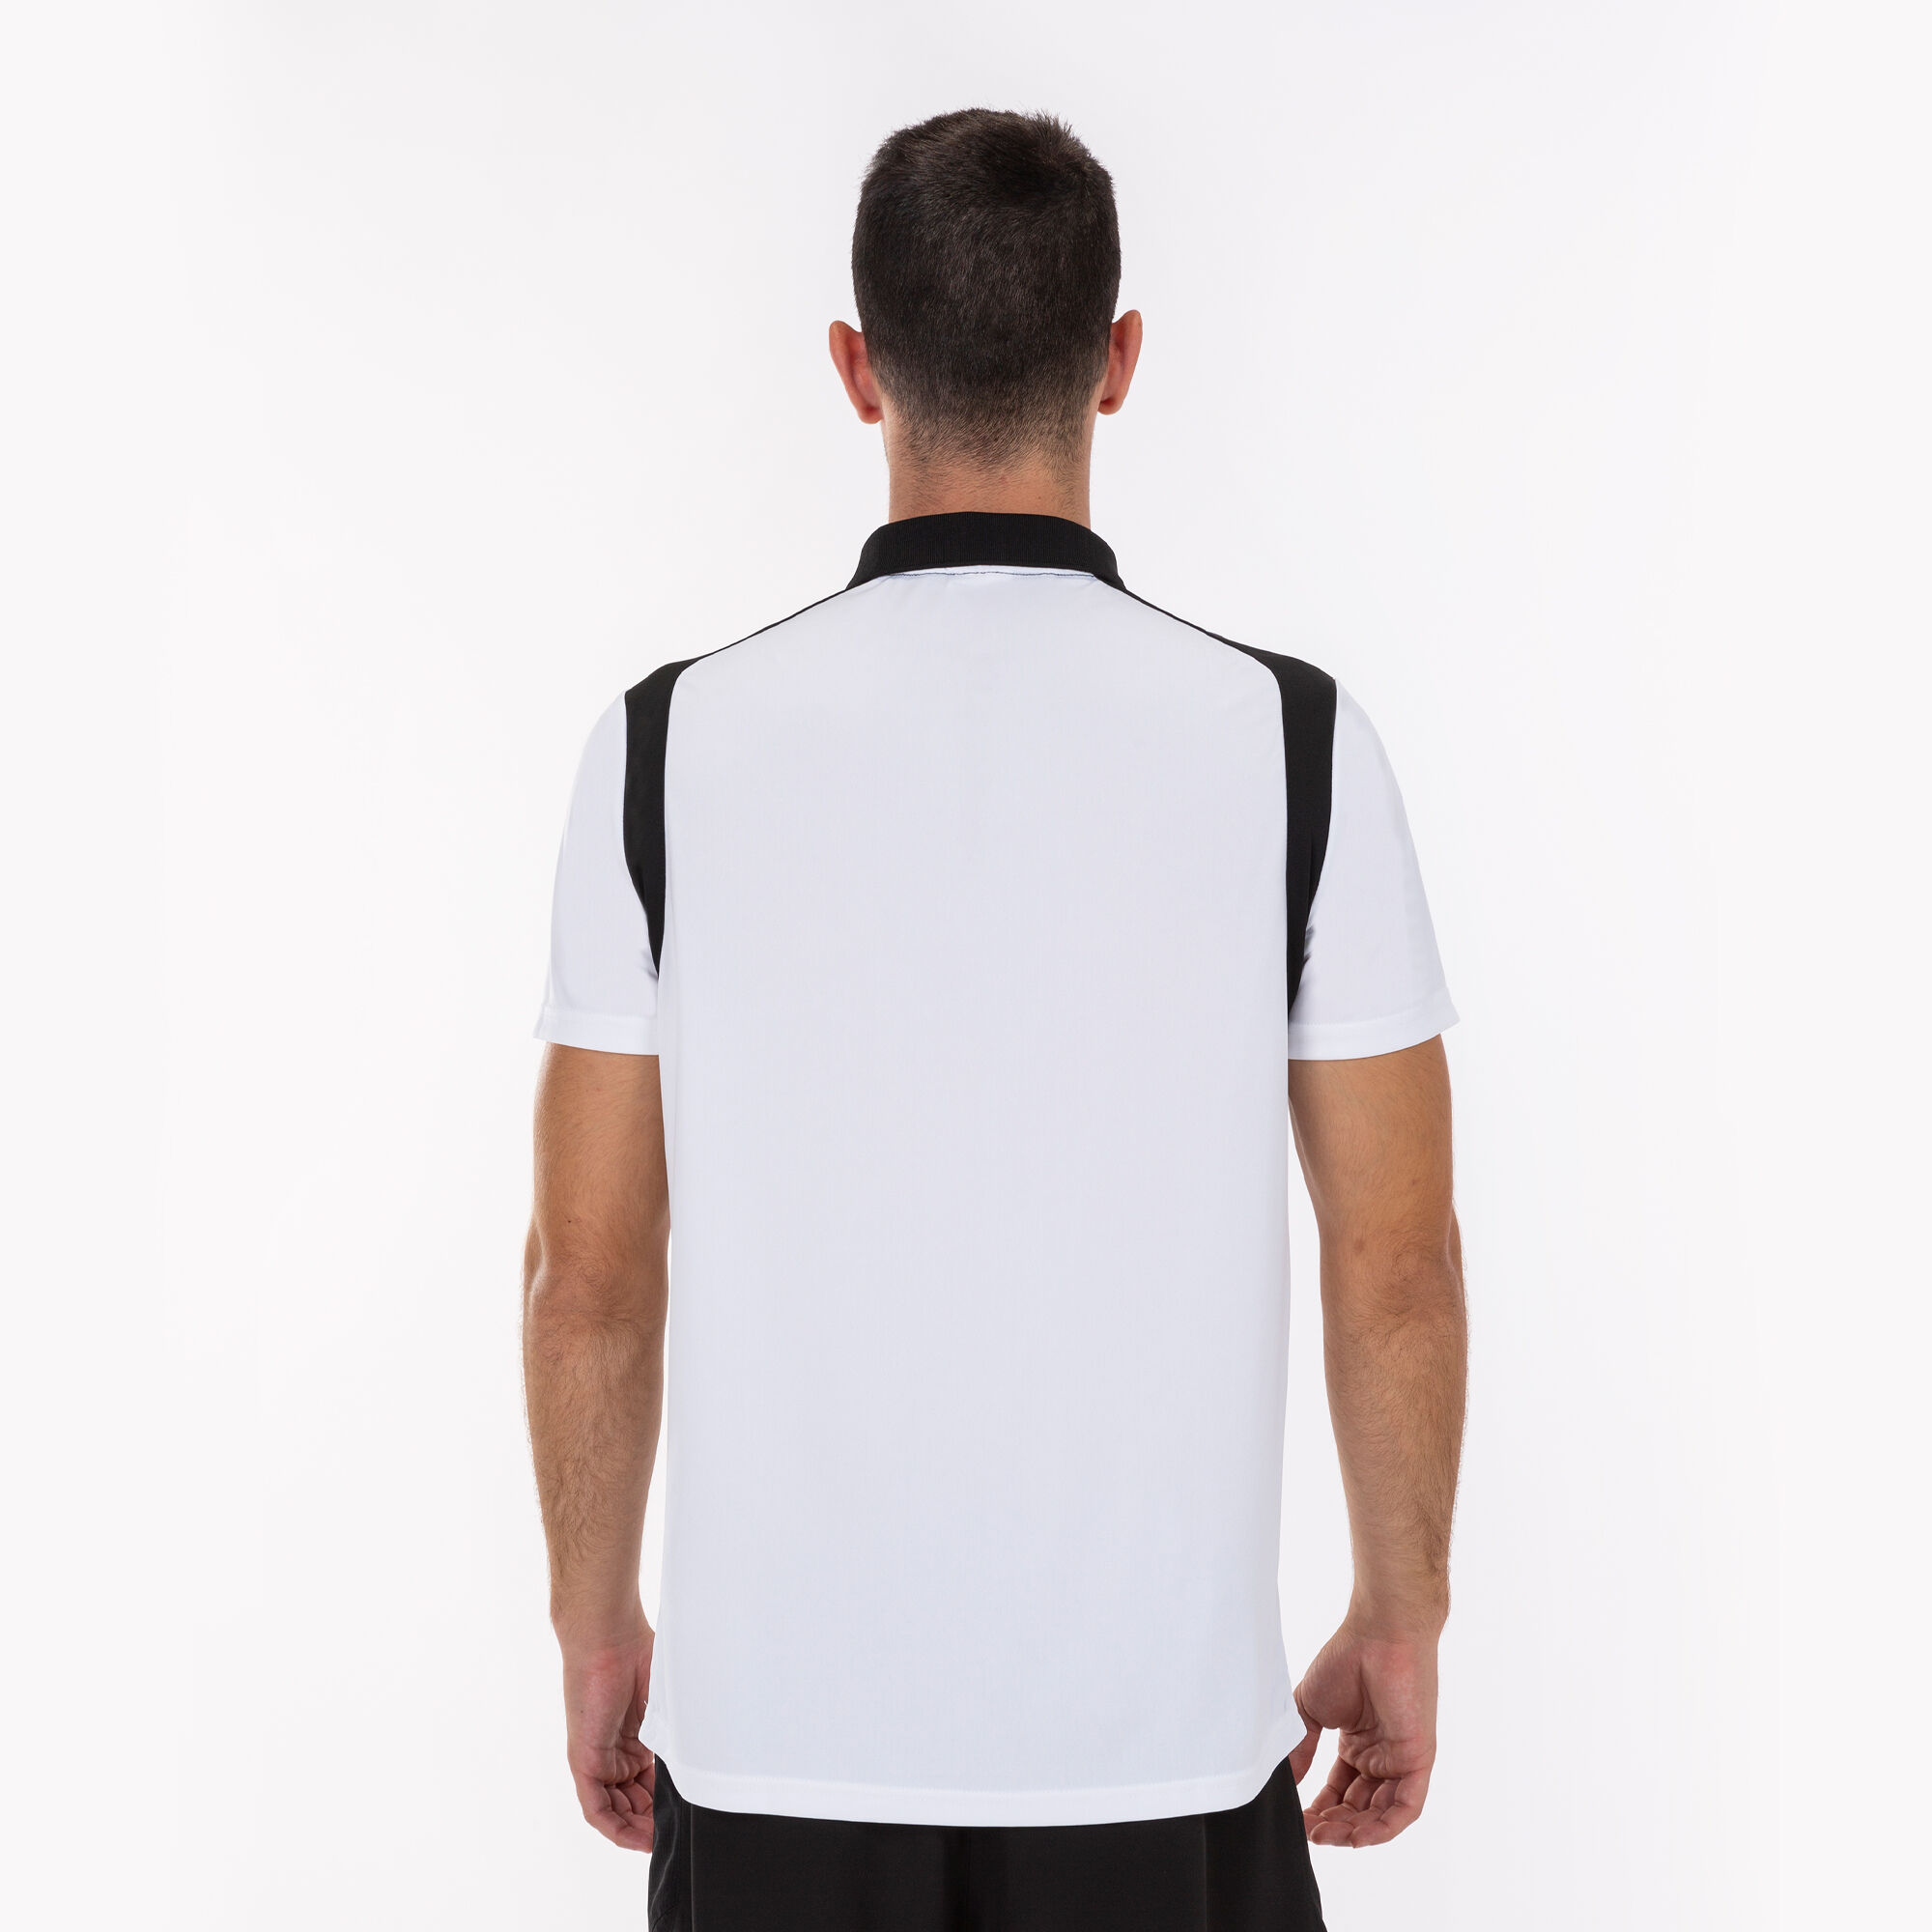 Polo shirt short-sleeve man Championship V white black